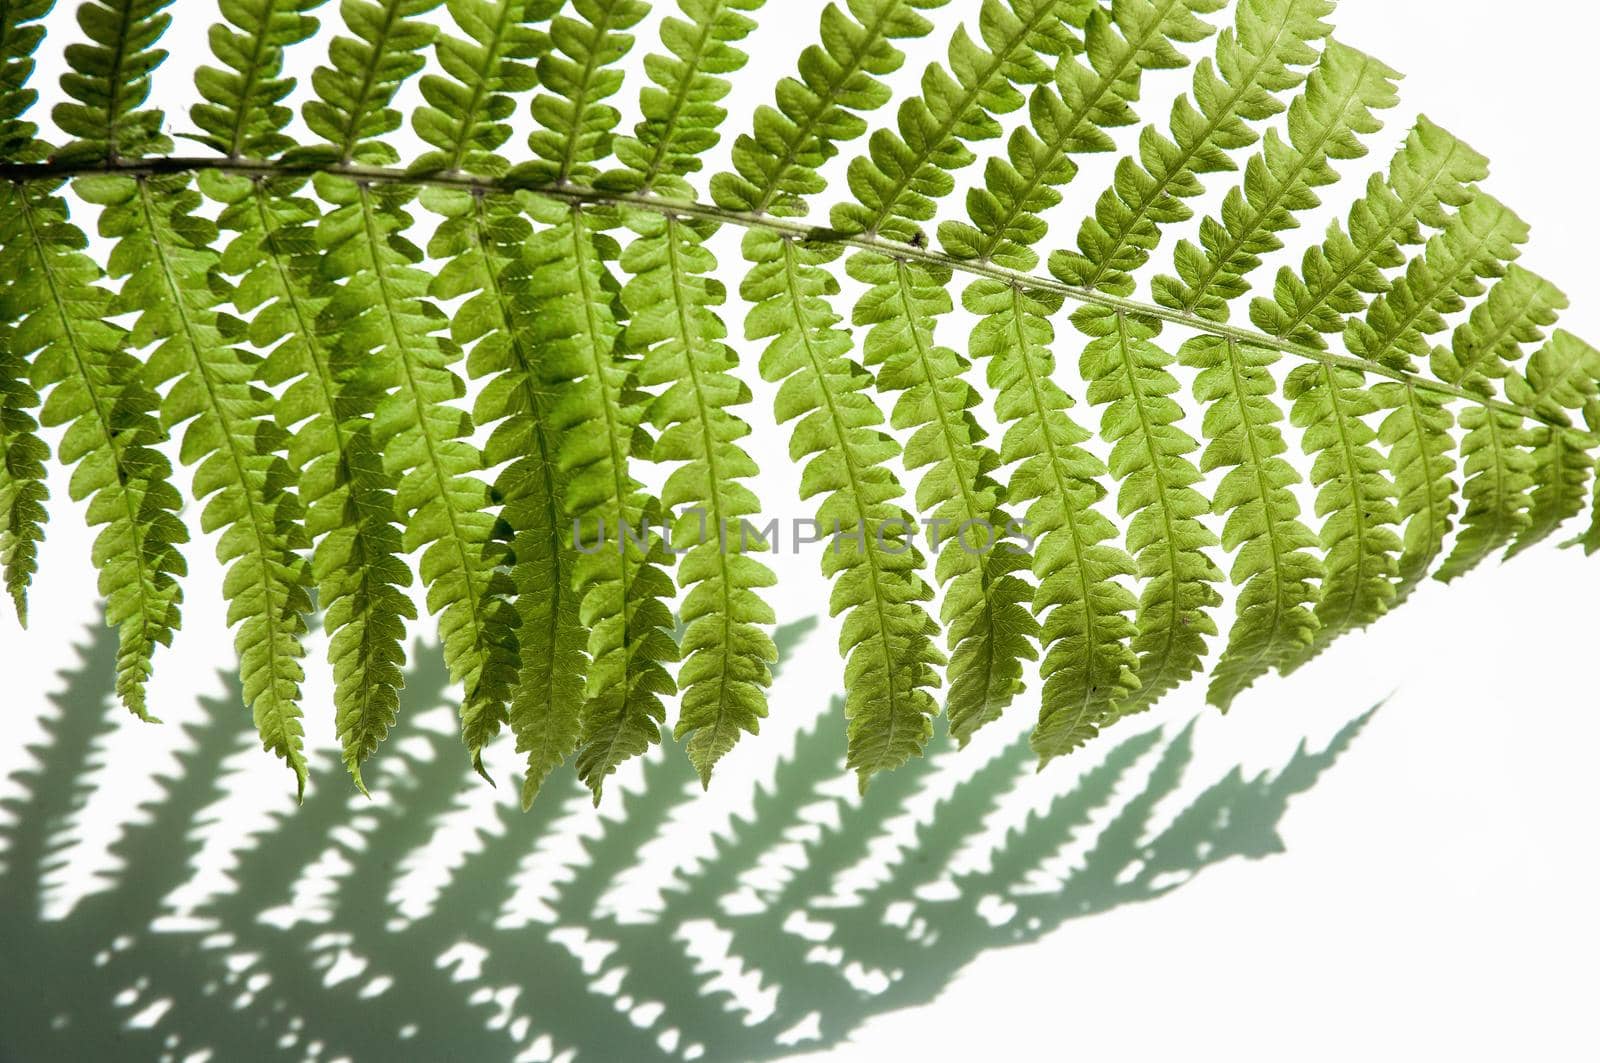 minimalism style, fern leaf on paper background by ozornina